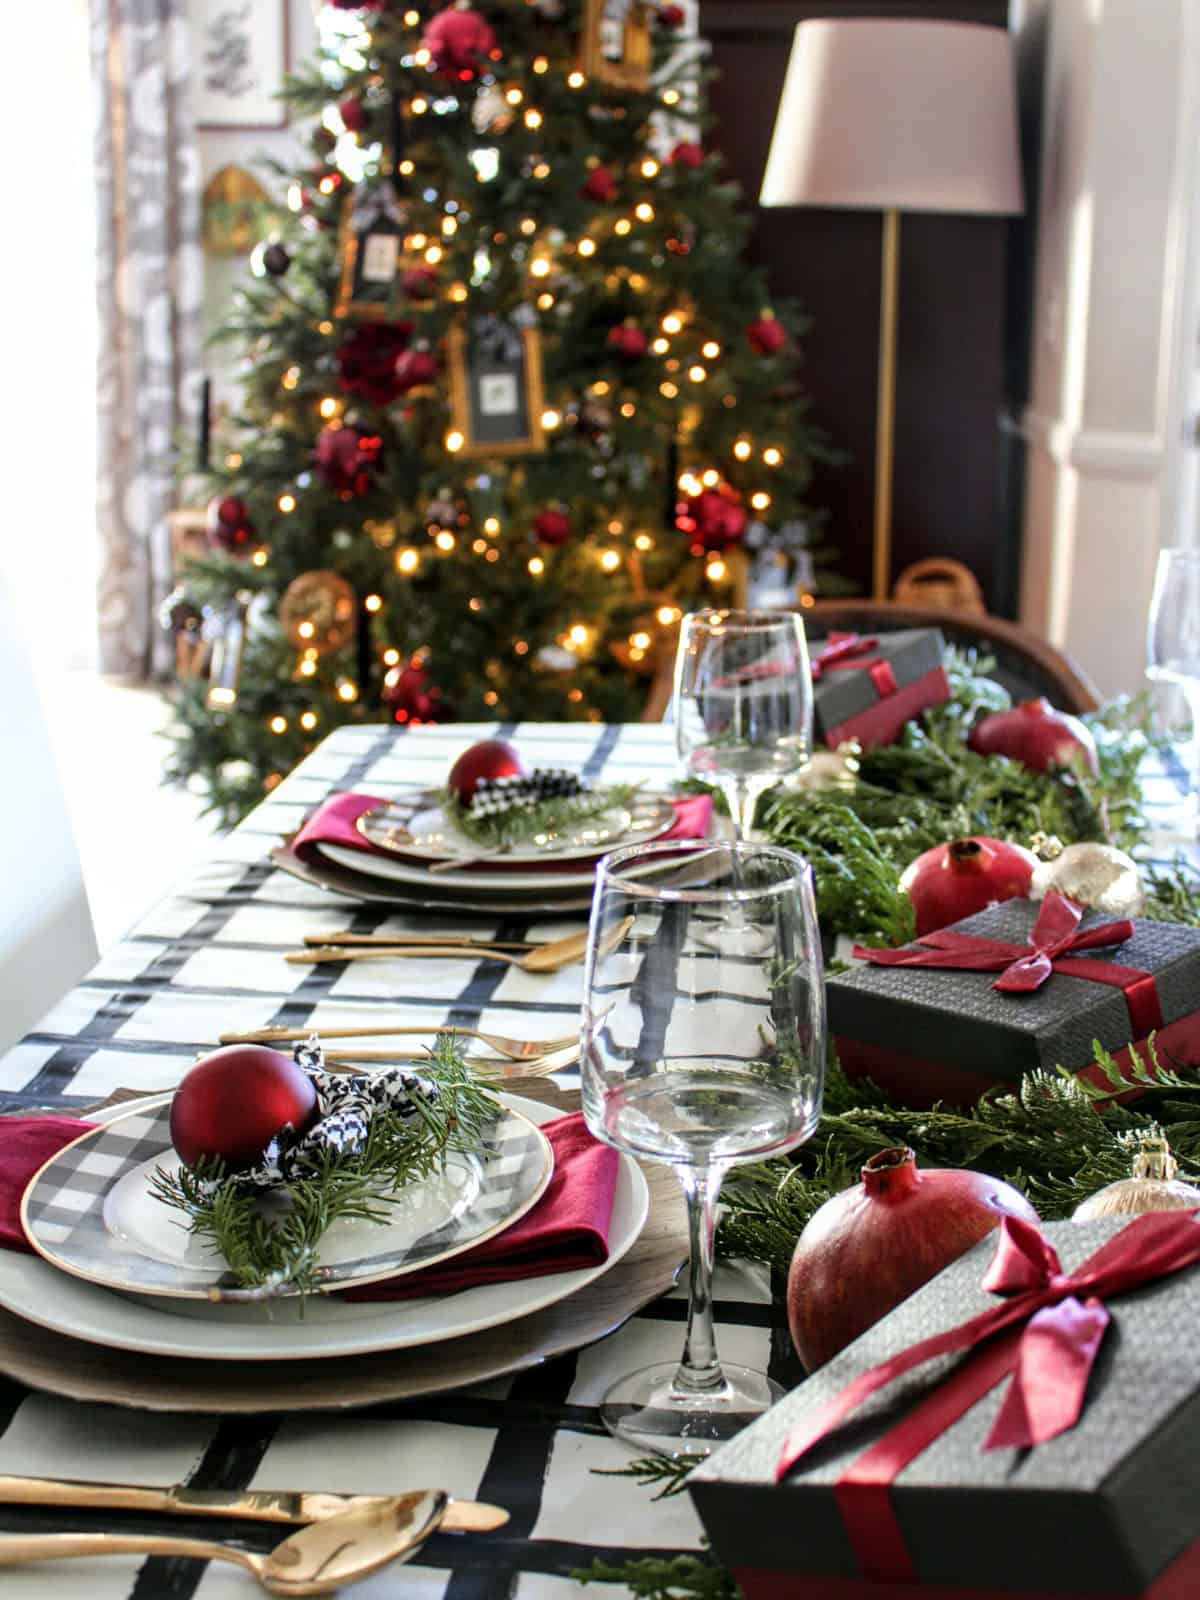 Christmas Table Decoration. 3 Top 70+ Christmas Decoration Ideas - 20